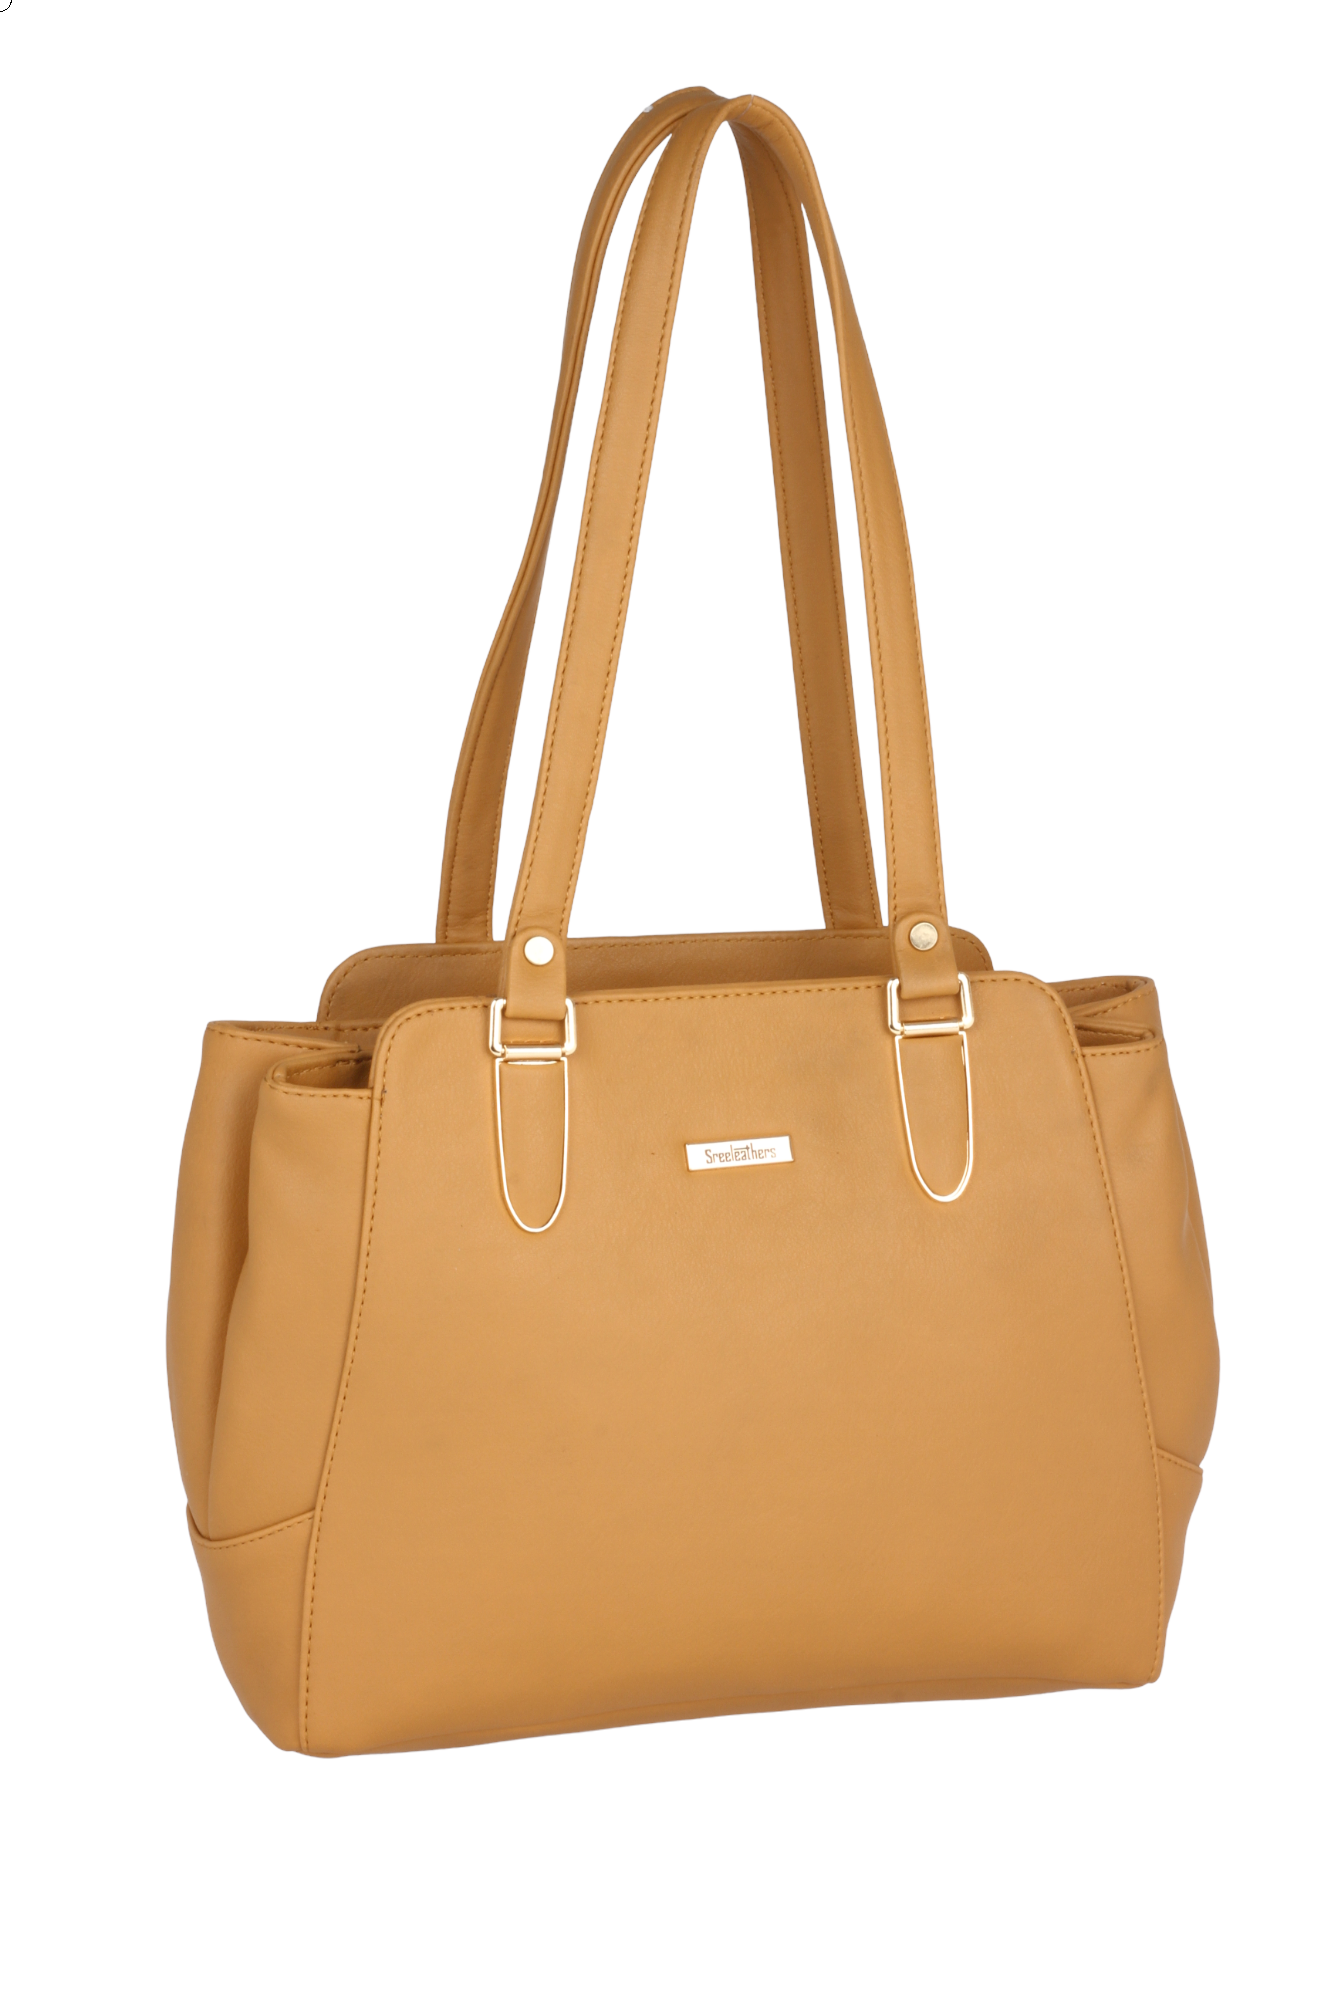 Handbags for women | ladies handbags | bags for women